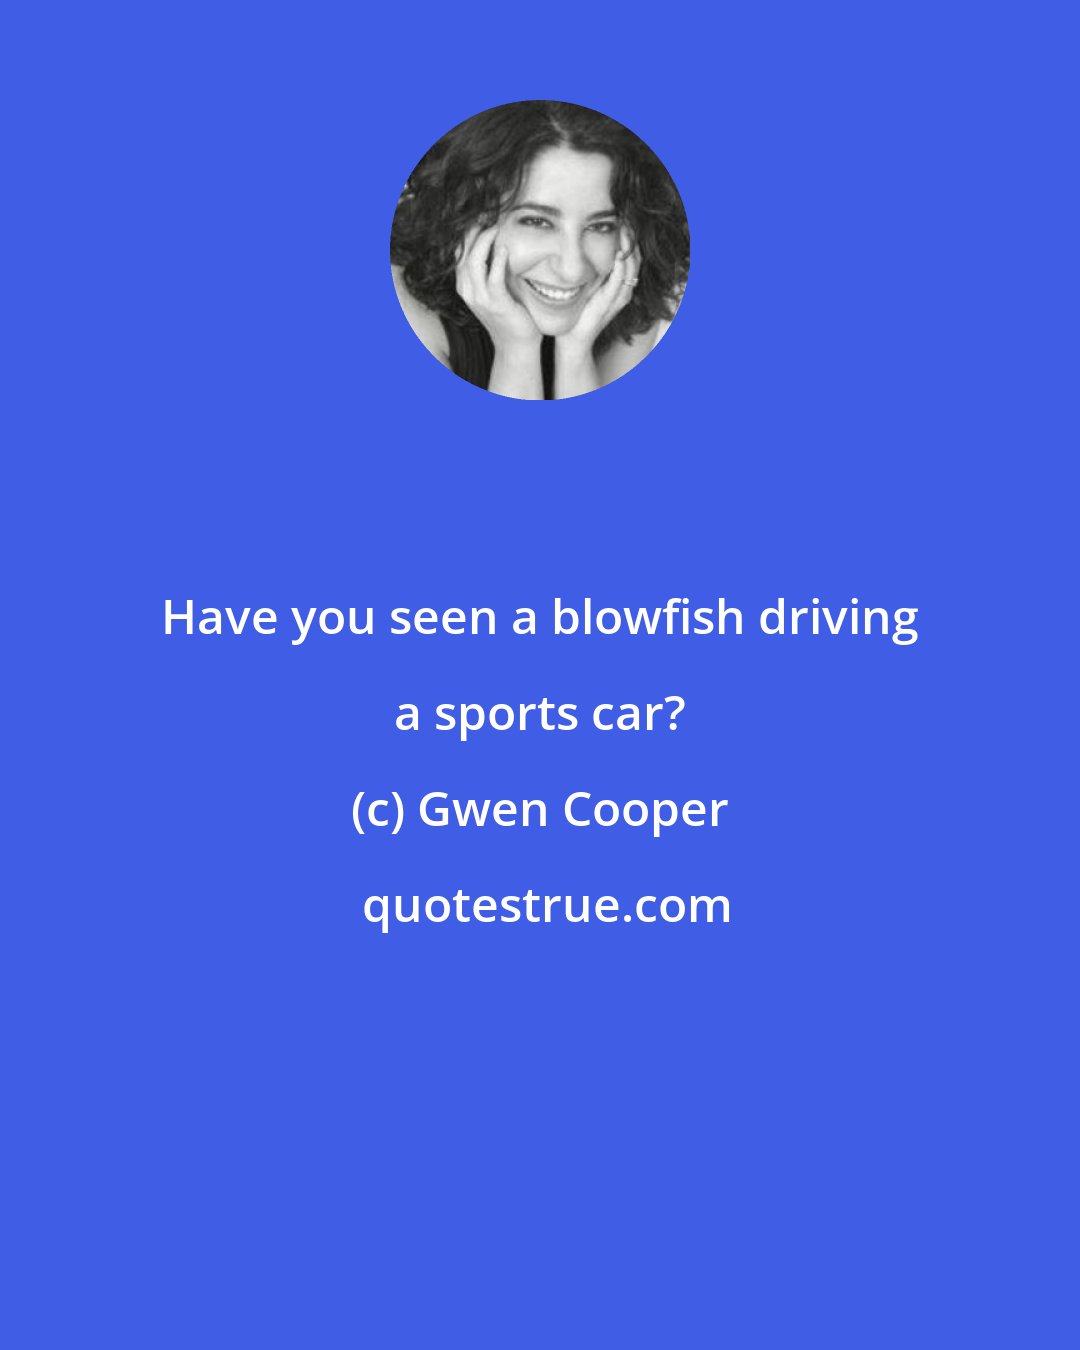 Gwen Cooper: Have you seen a blowfish driving a sports car?